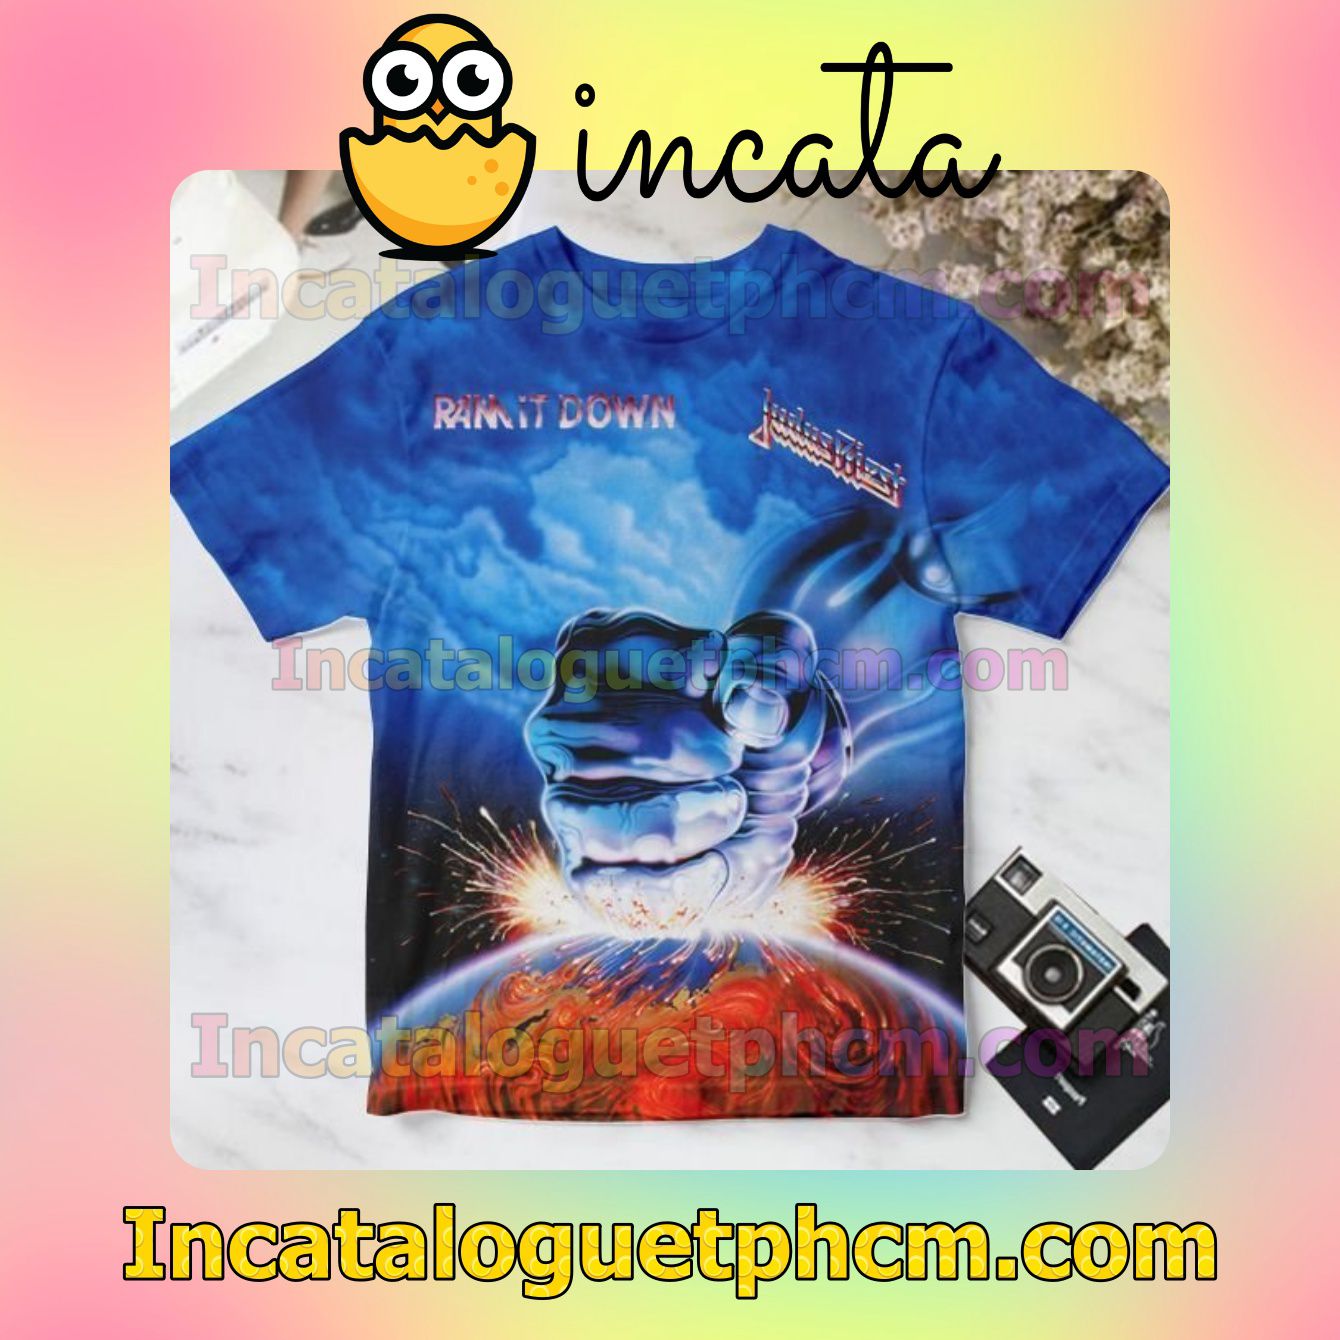 Judas Priest Ram It Down Album Cover Personalized Shirt